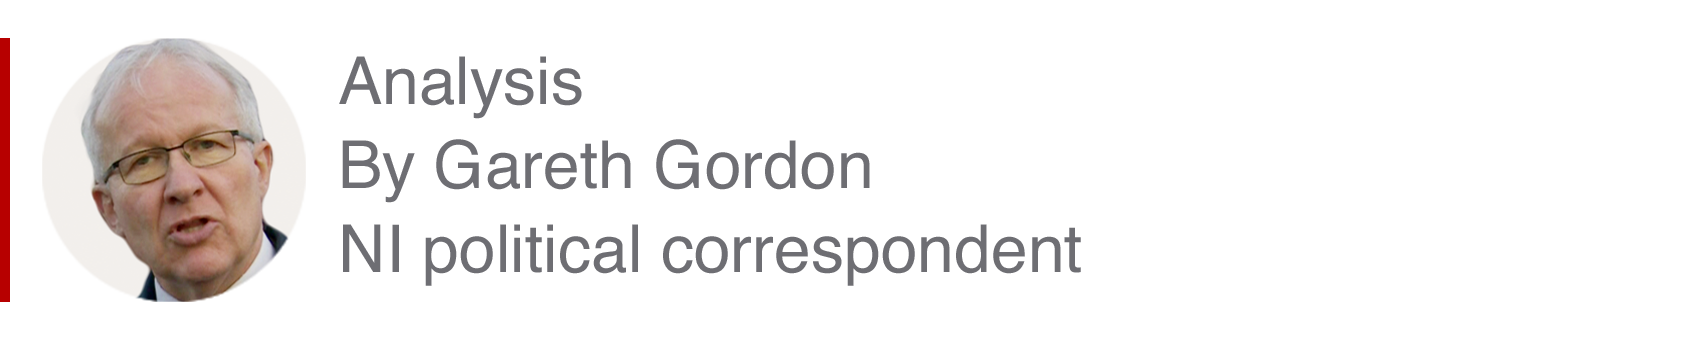 Analysis box by Gareth Gordon, NI political correspondent